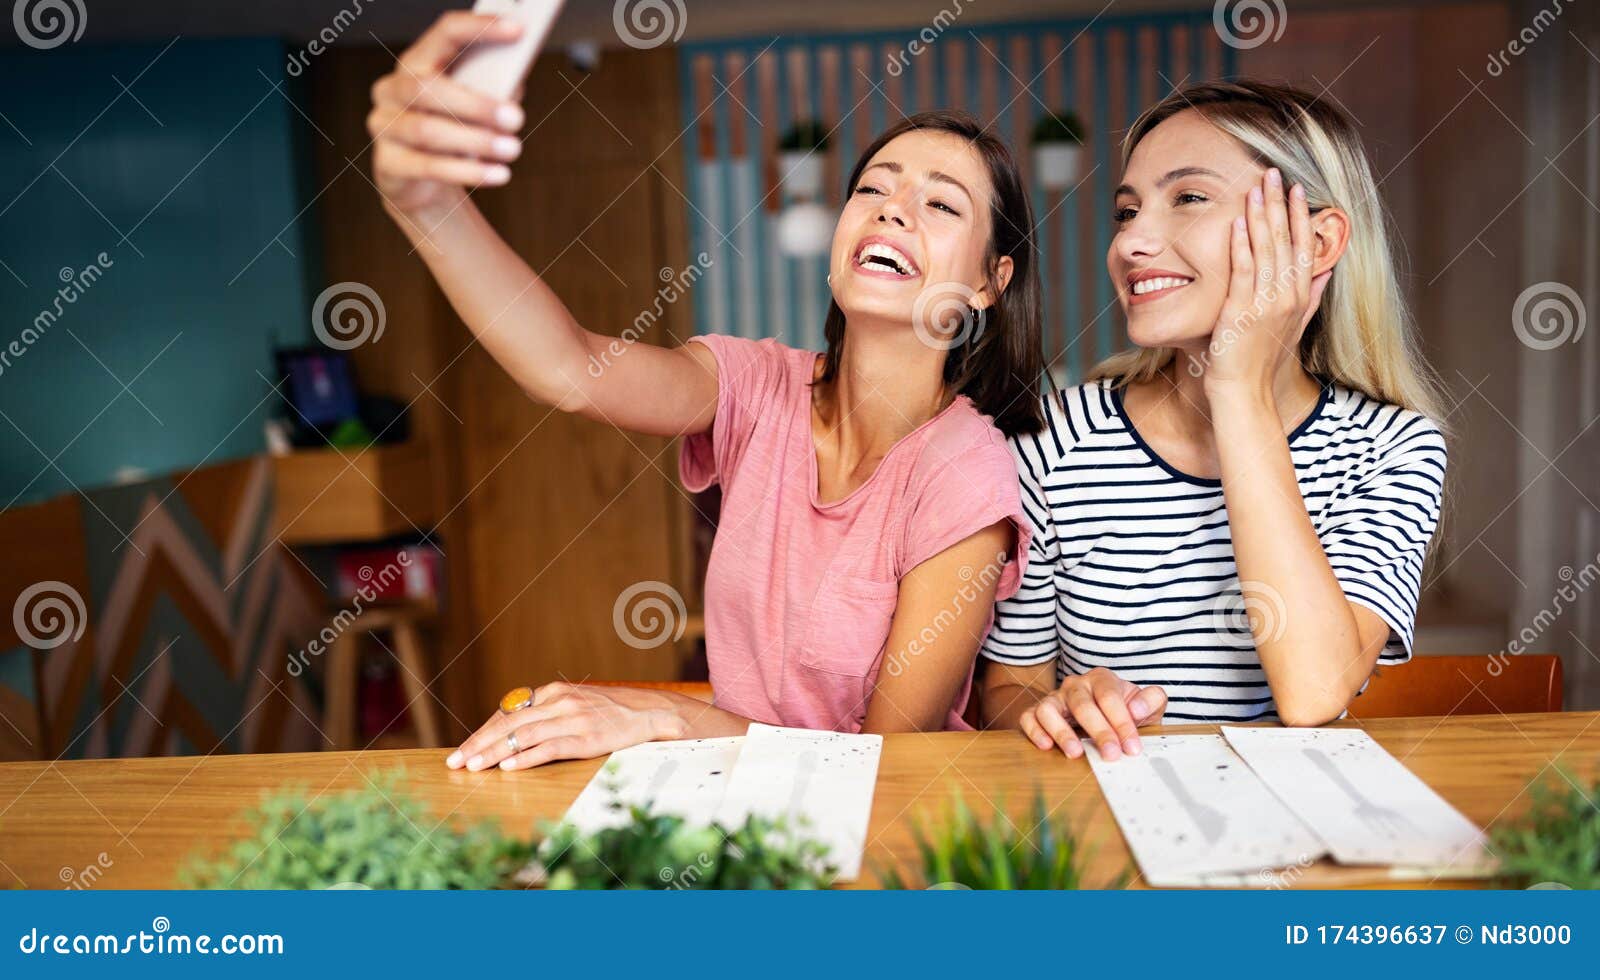 Happy Smiling Women Friends Having Fun and Taking Selfie Stock Image ...